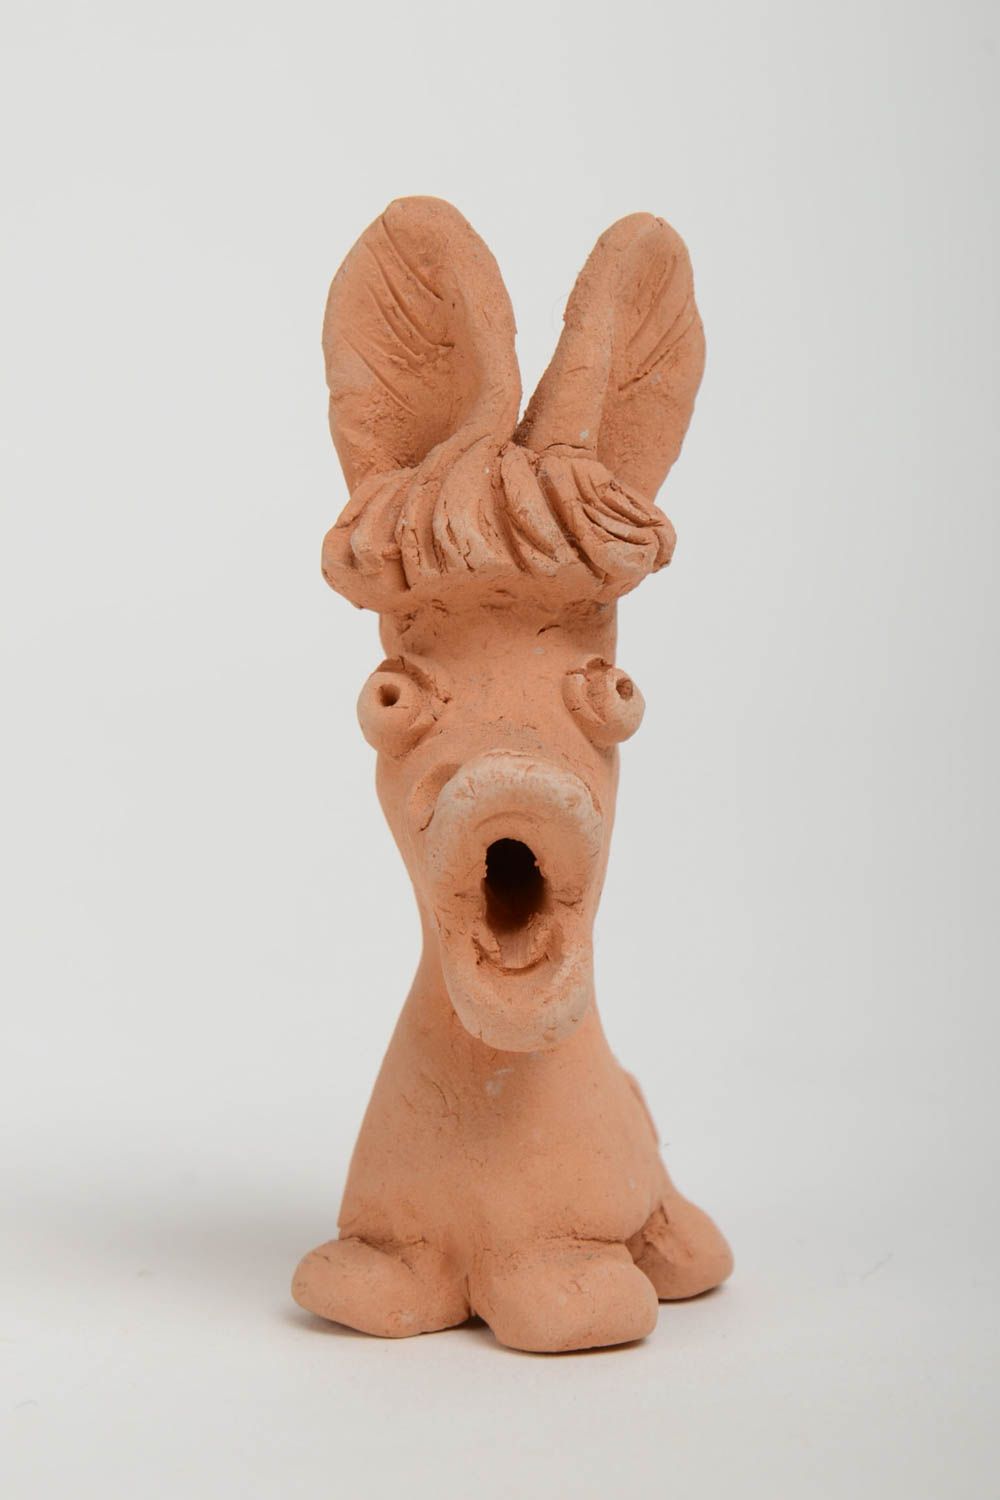 Small funny decorative ceramic souvenir figurine of donkey for interior design photo 2